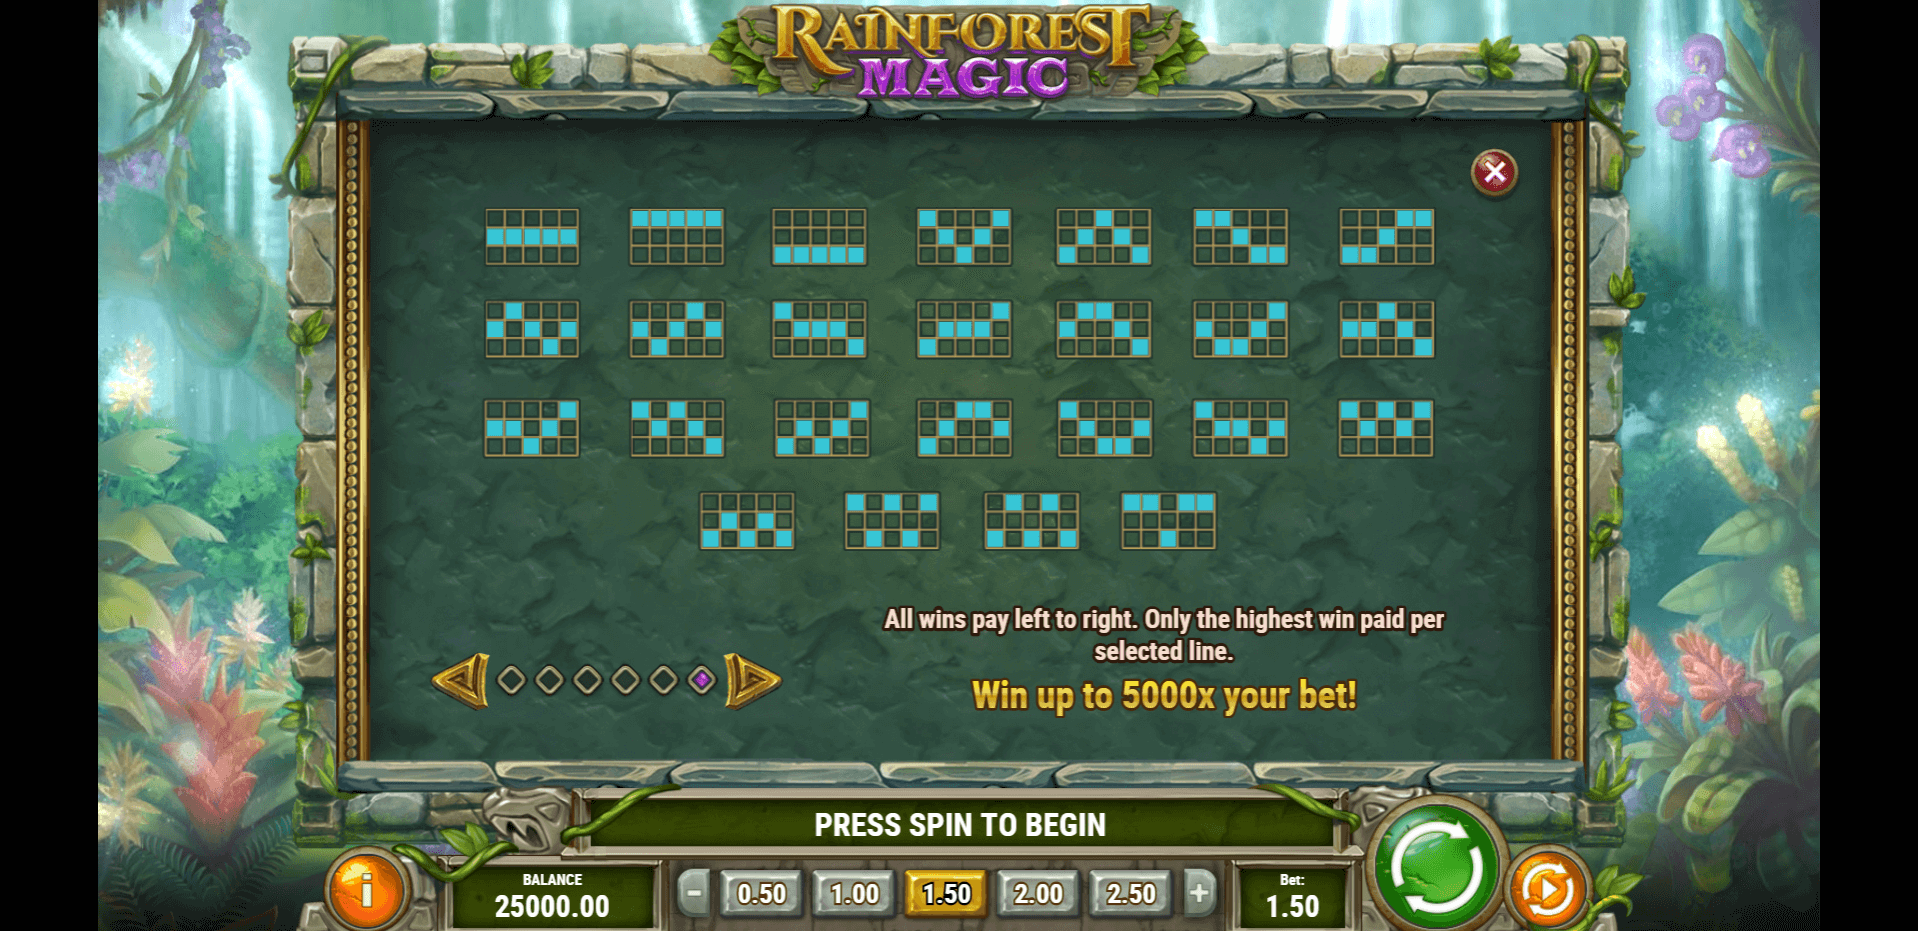 rainforest magic slot machine detail image 5